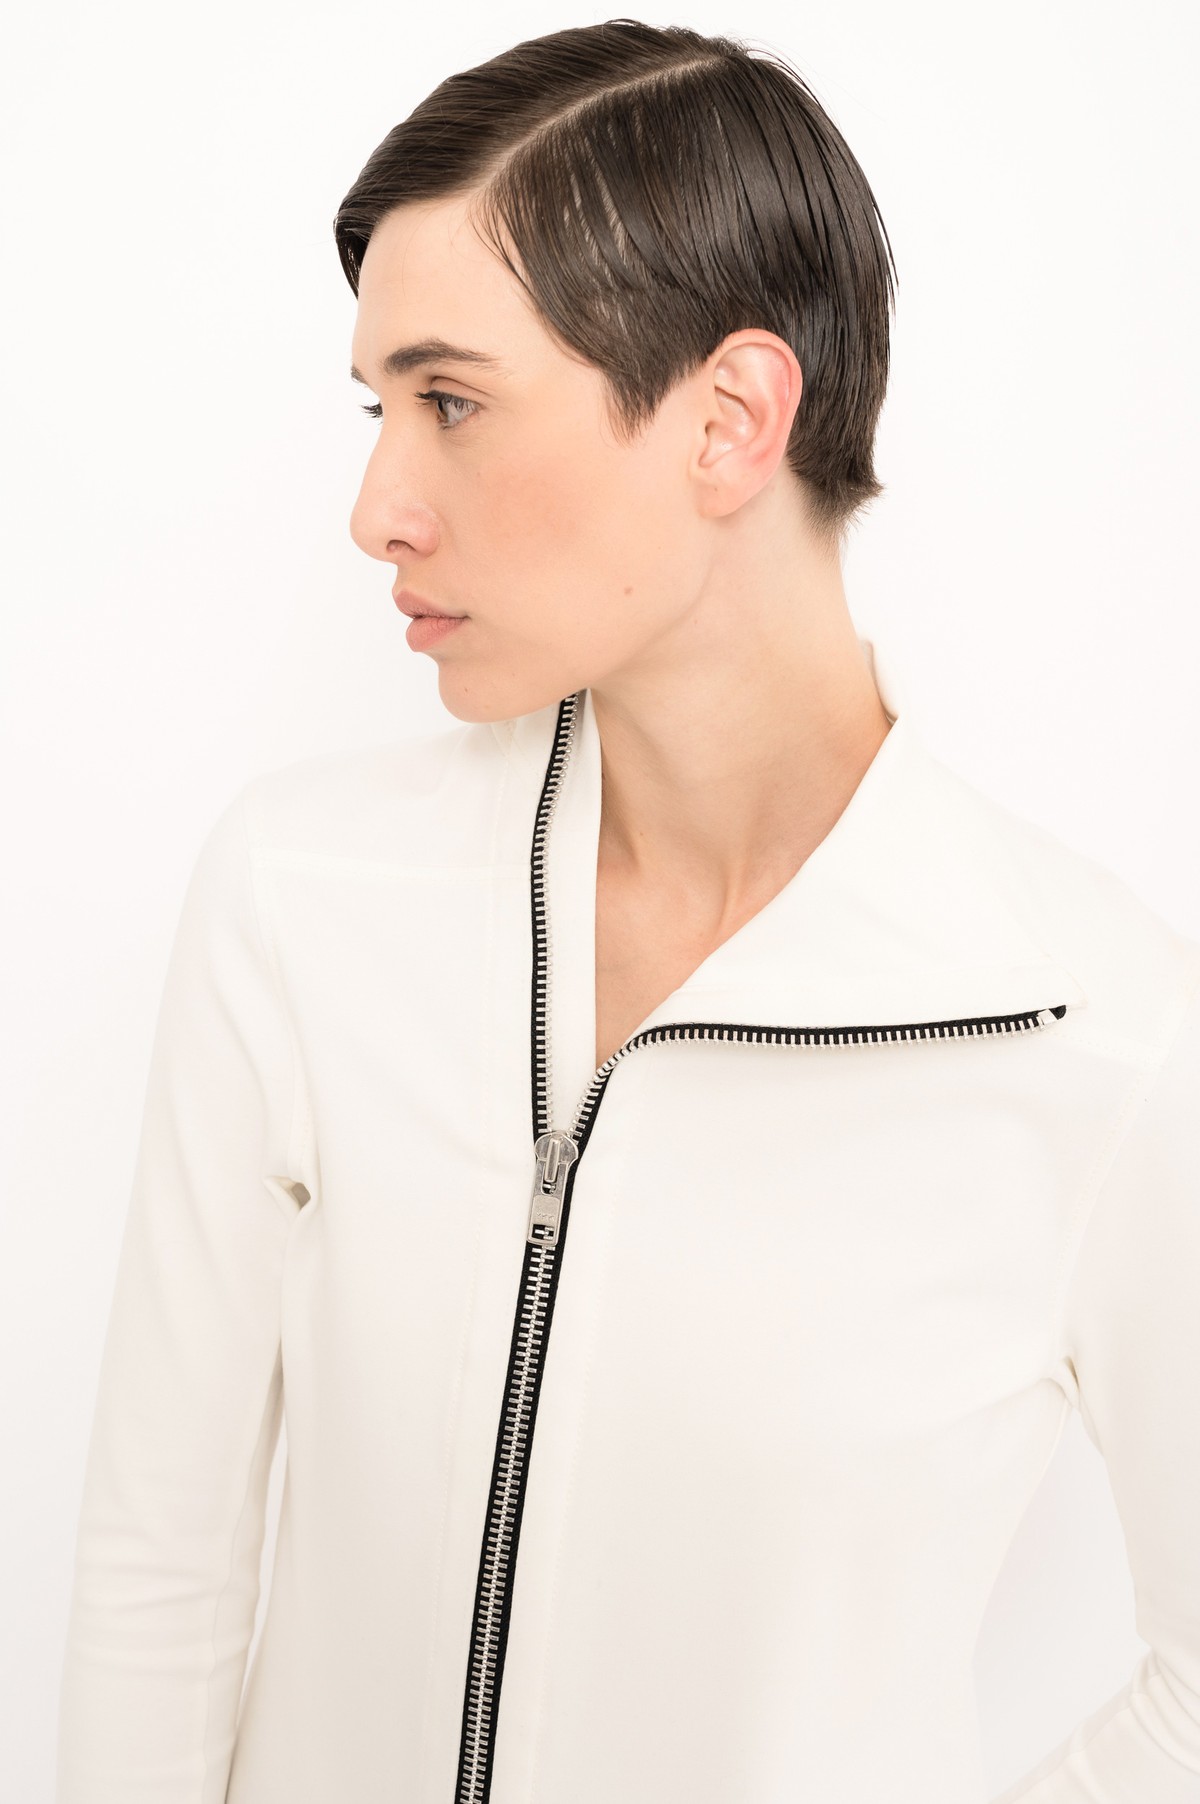 jaqueta assimétrica em malha compacta | asymmetric compact jersey jacket